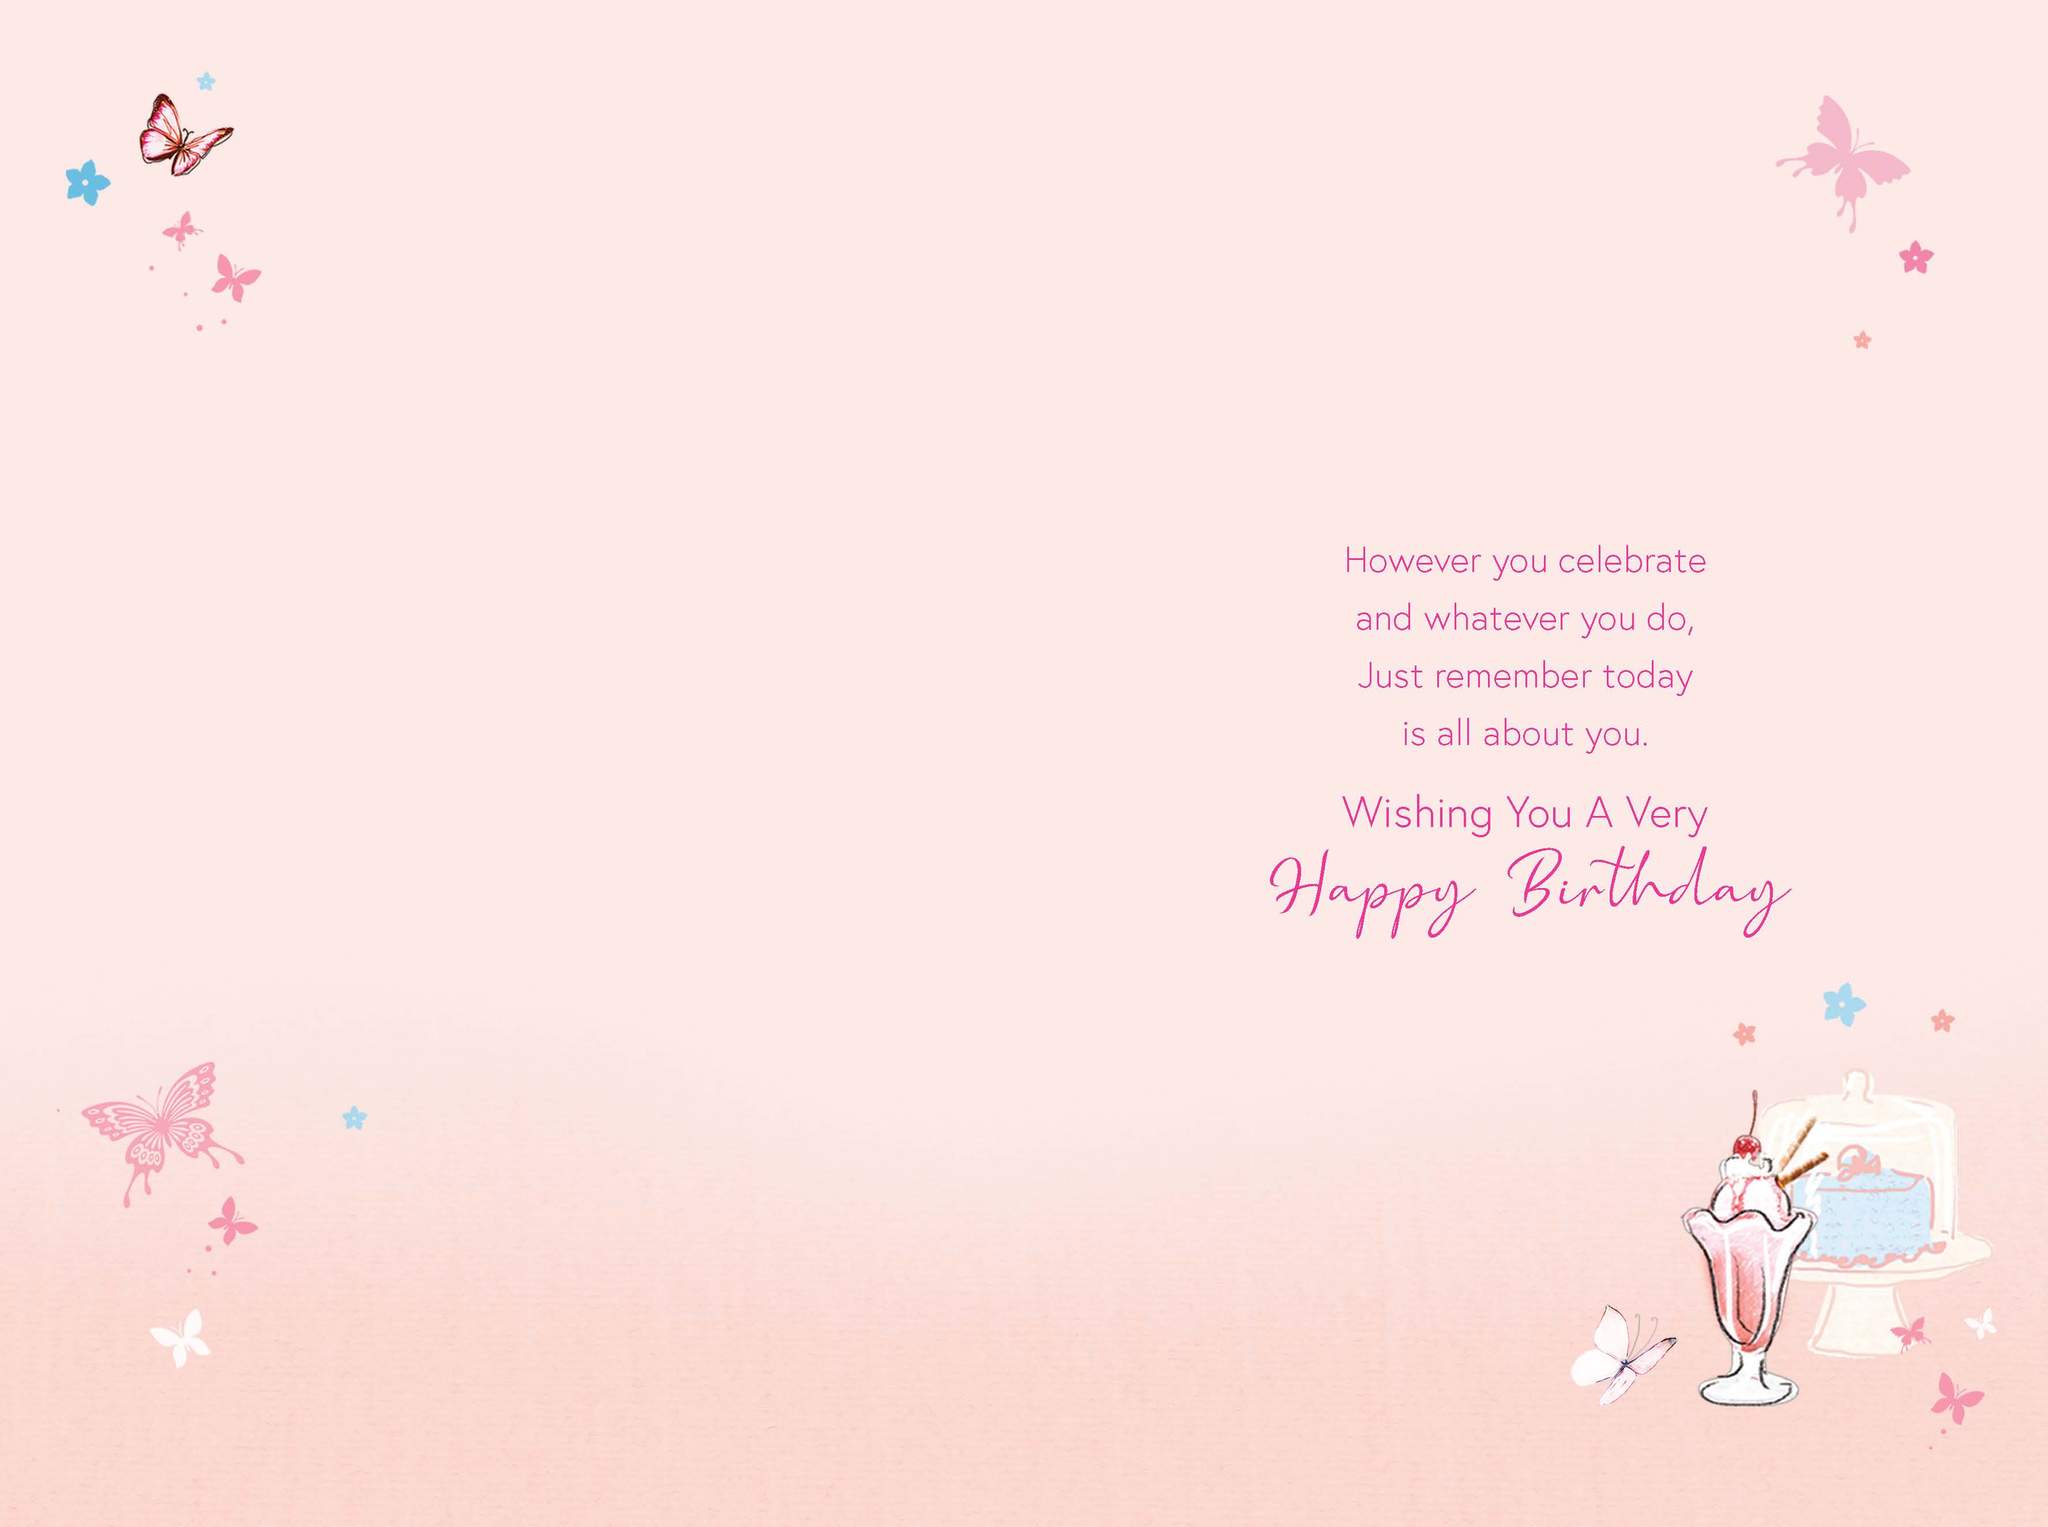 Friend Birthday Card - Friendship and Ice Cream